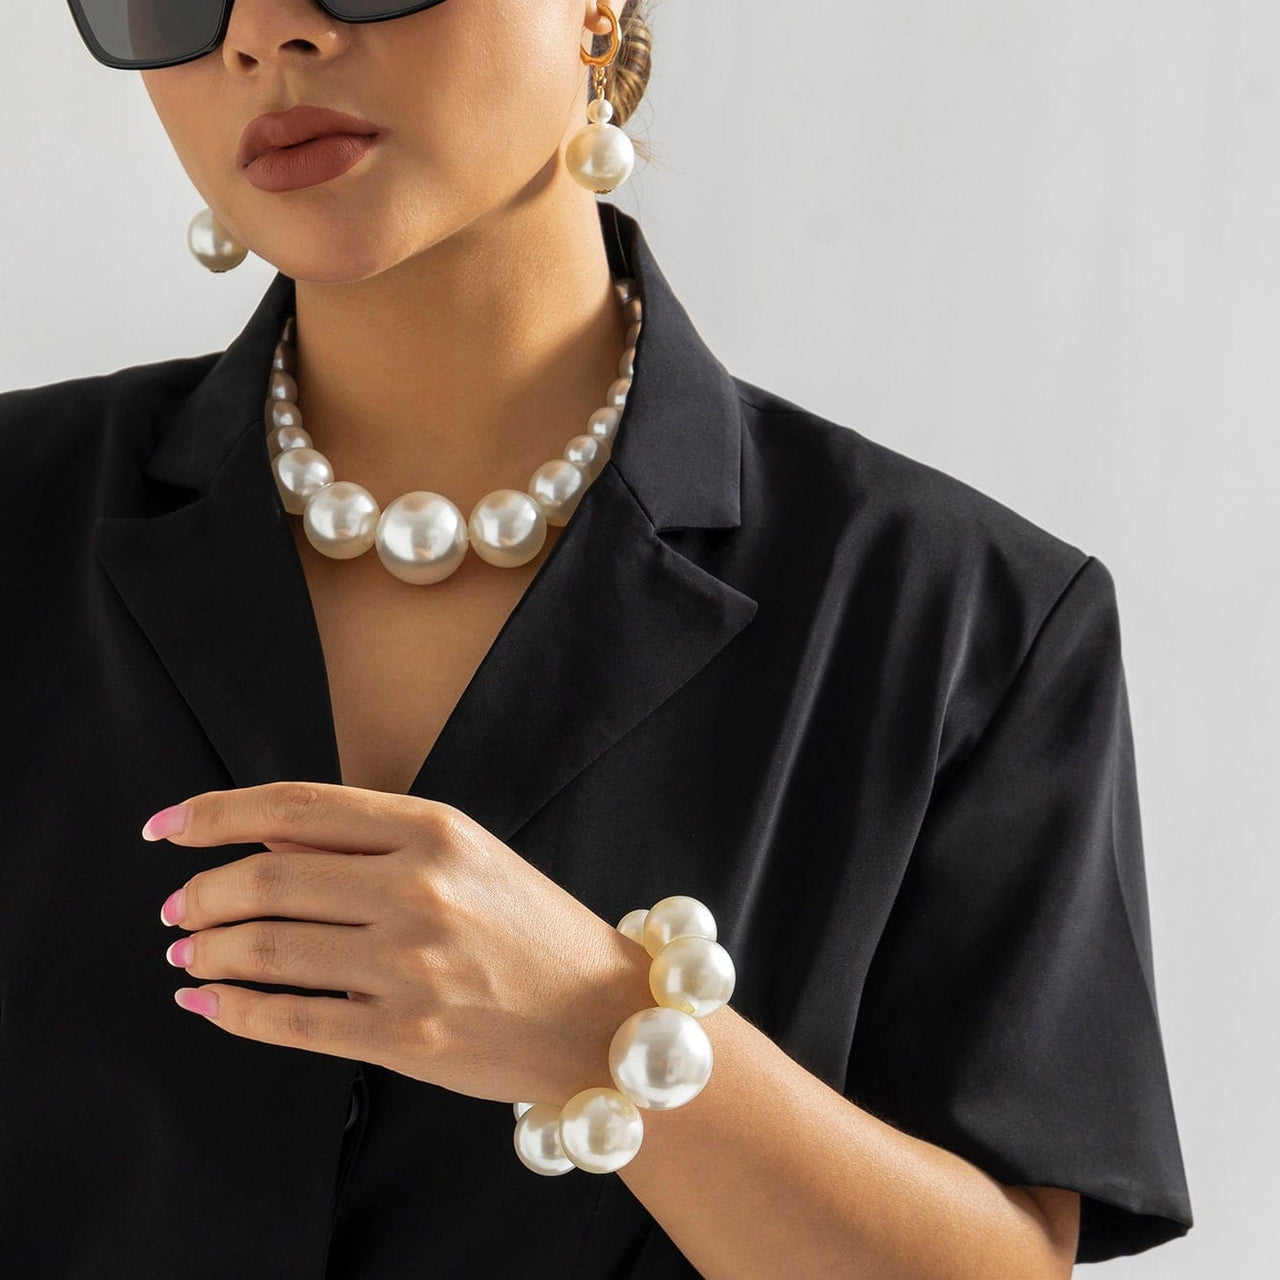 Women's Imitation Pearl Necklaces